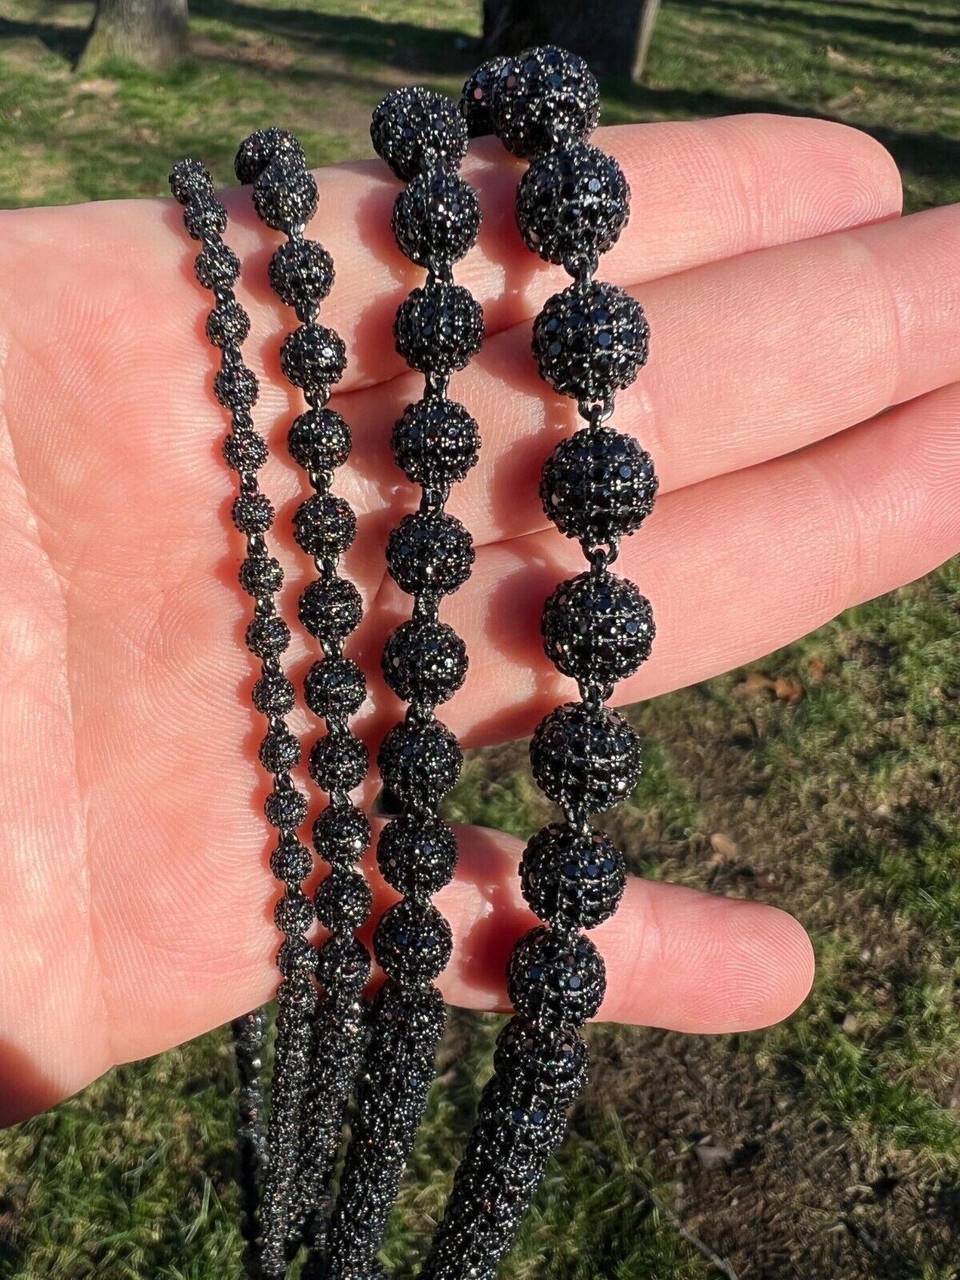 Black Rhodium Moissanite Disco Ball Chain Necklace 4-10mm